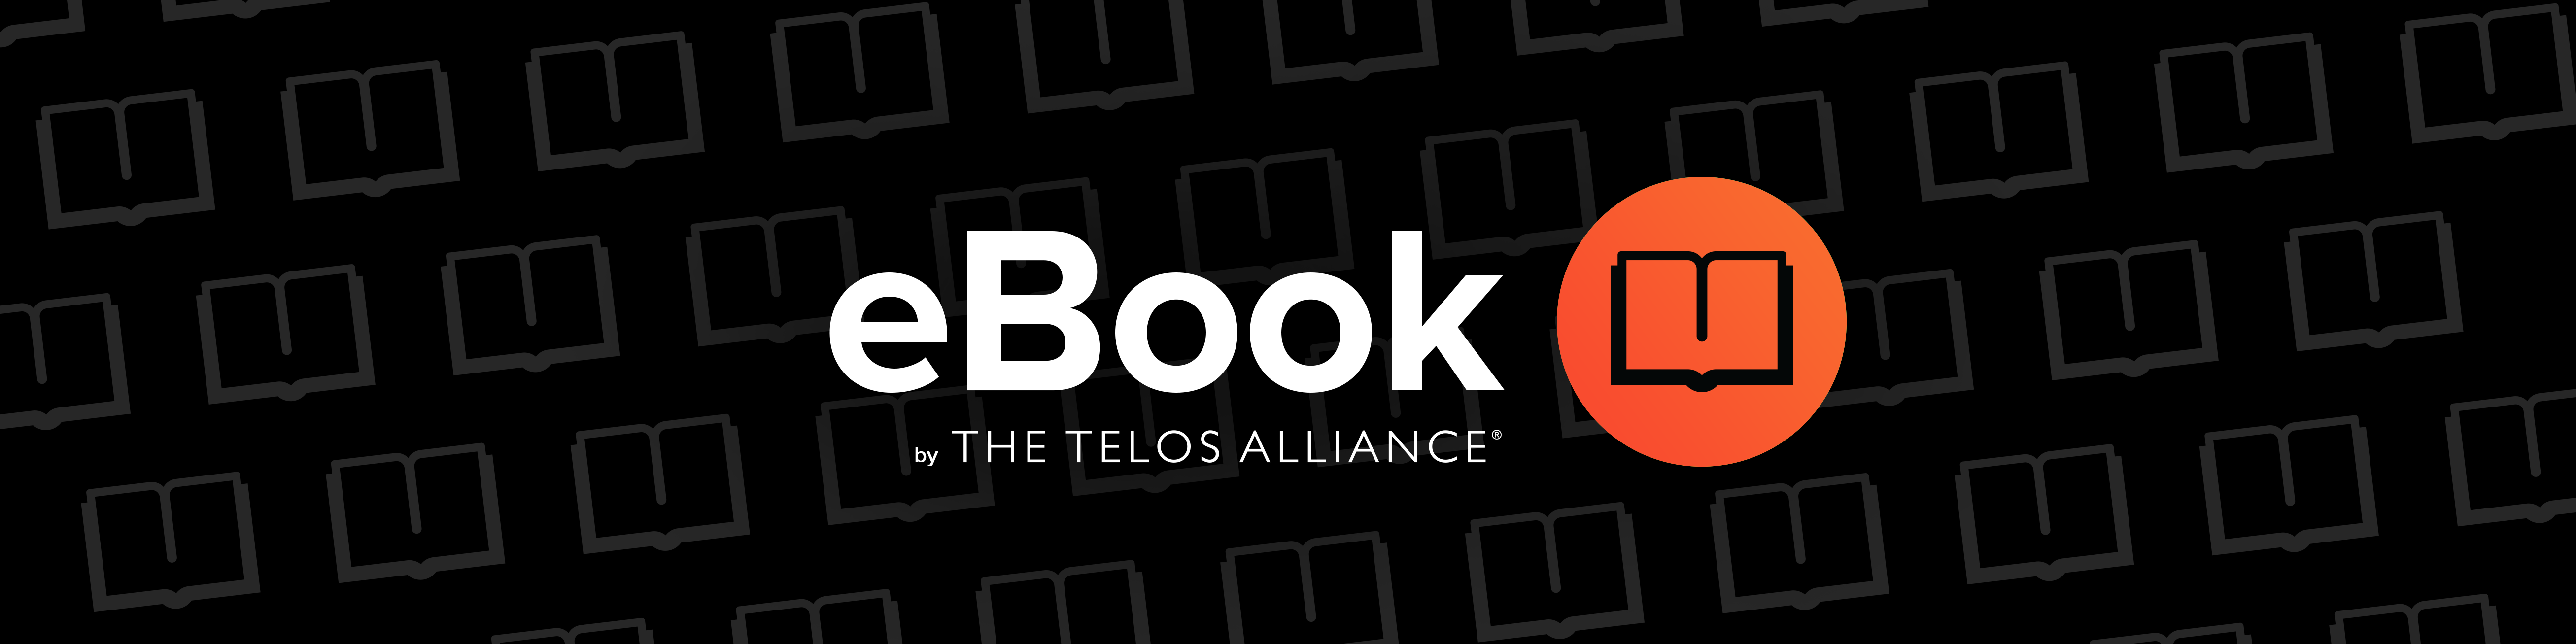 Telos Alliance AoIP eBook